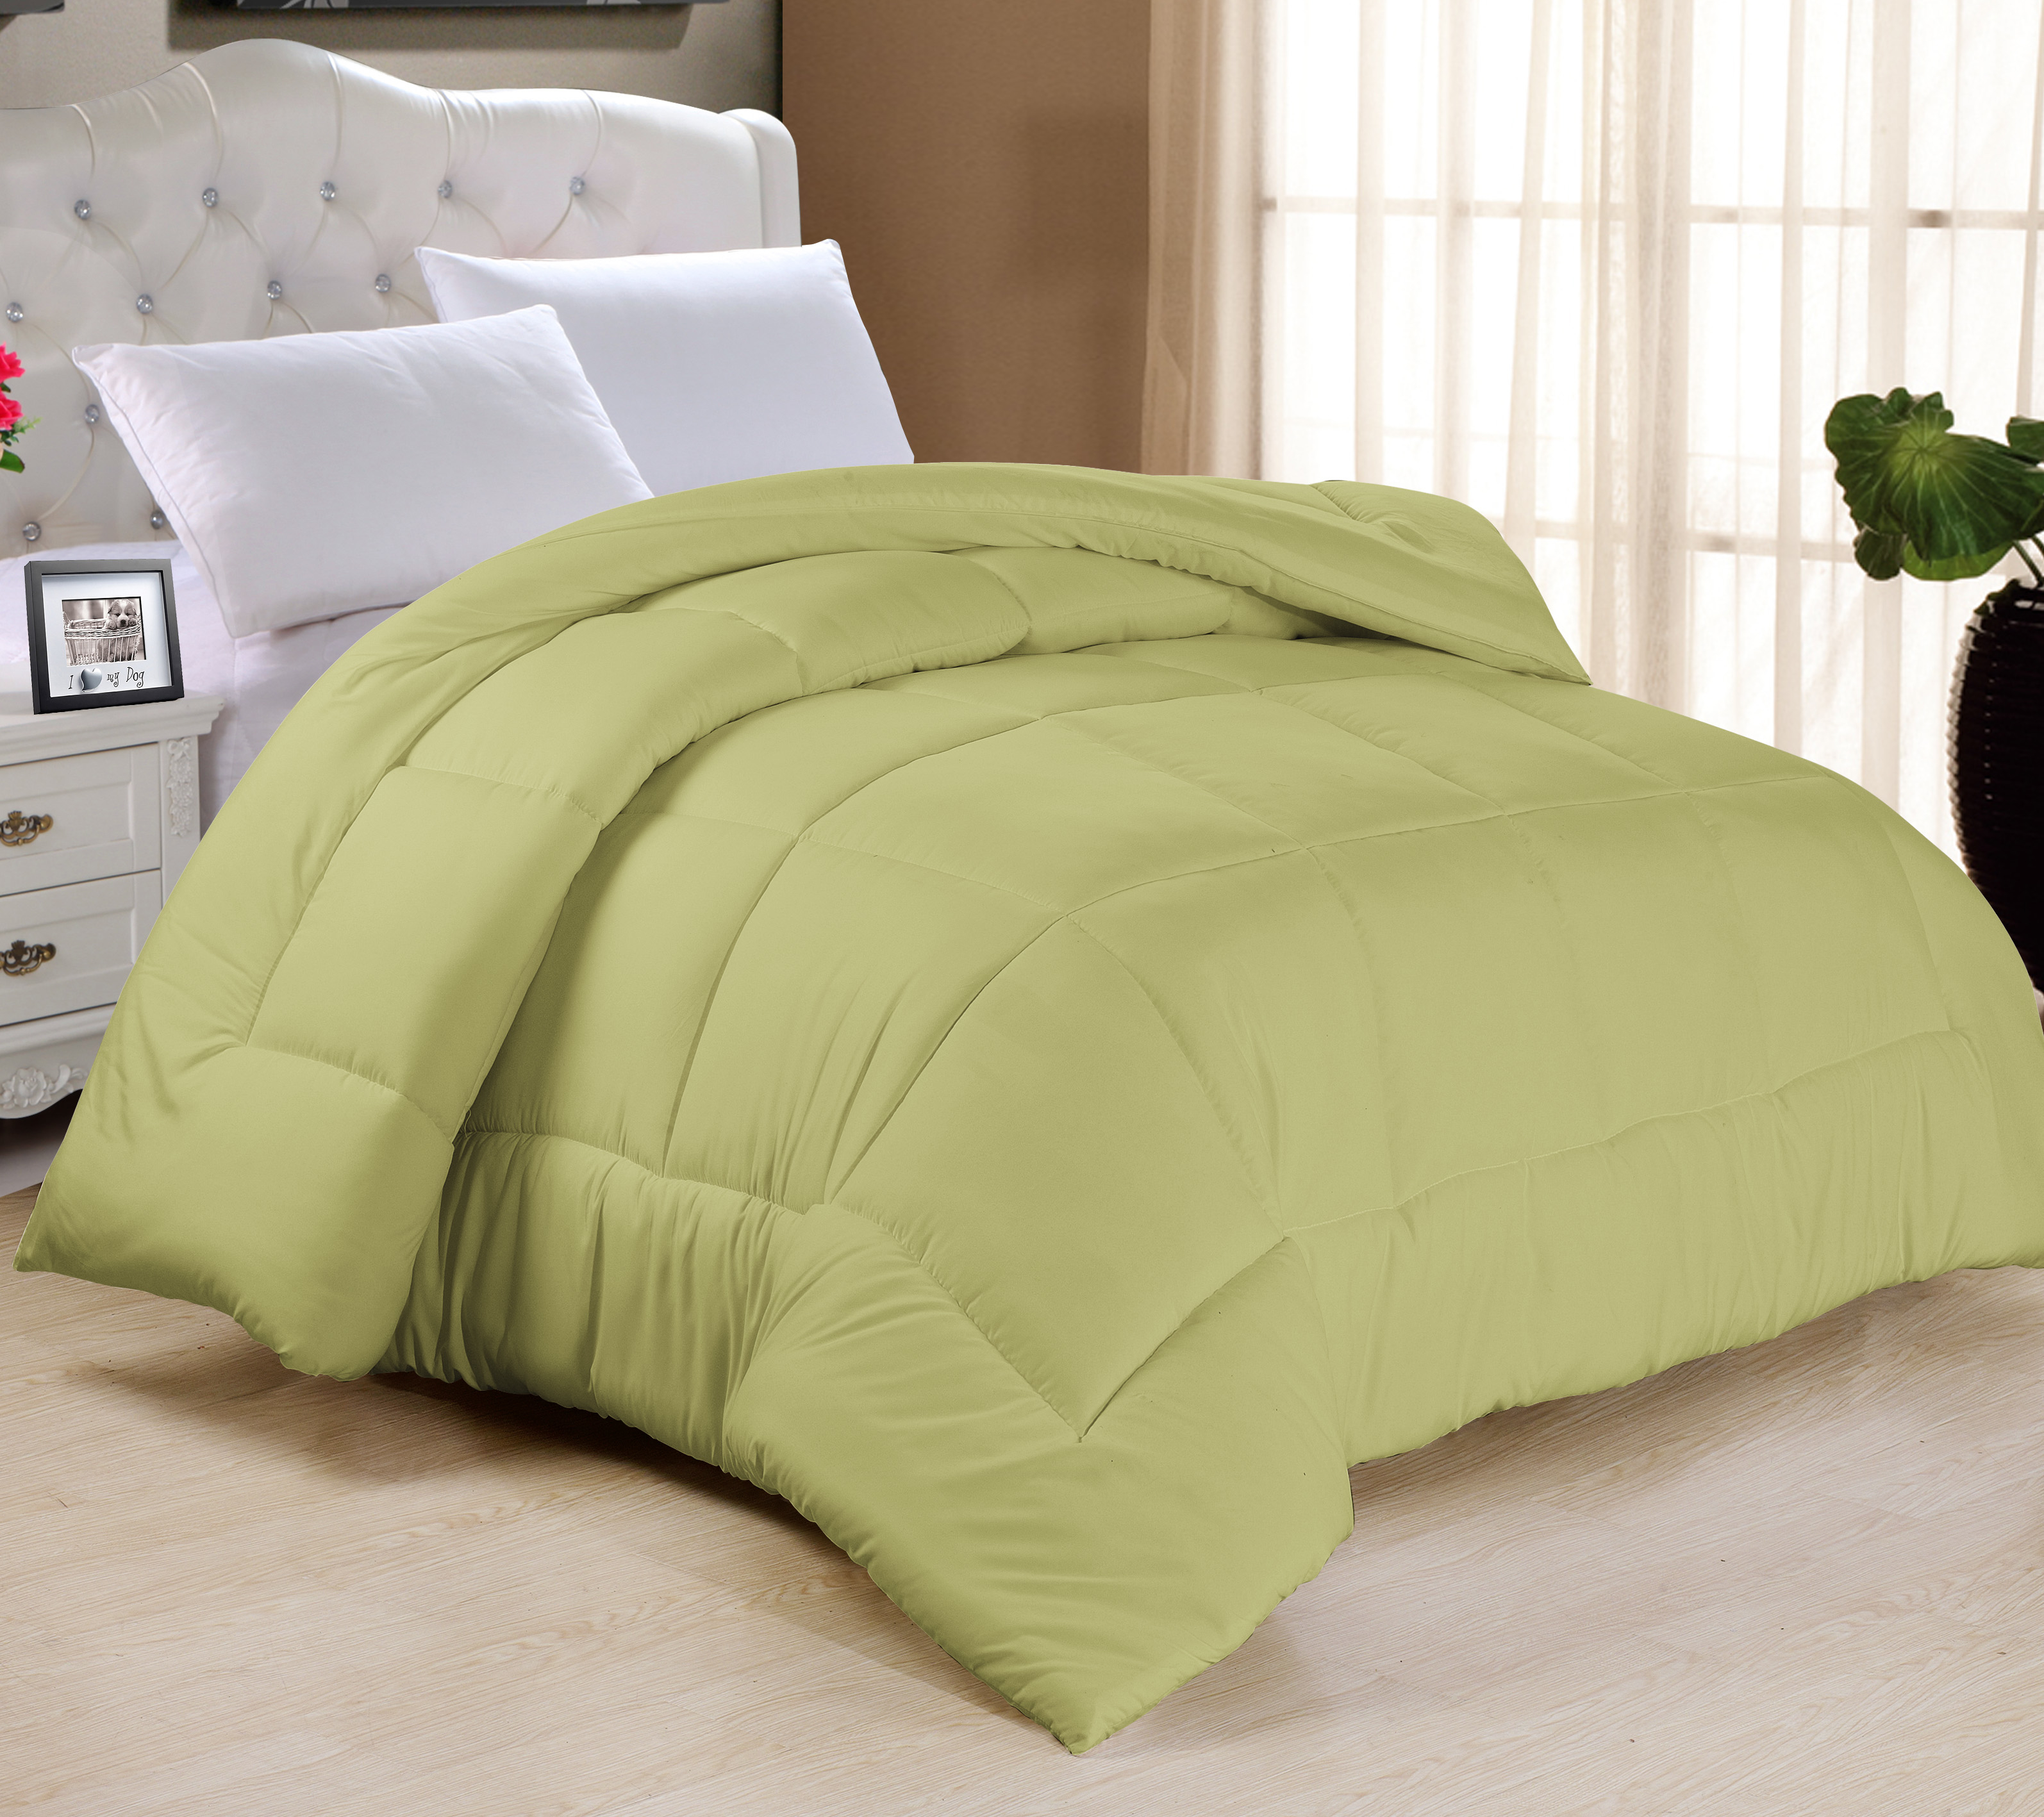 All-season Down Alternative Comforter Duvet Insert In 5 Colors - Twin, Sage